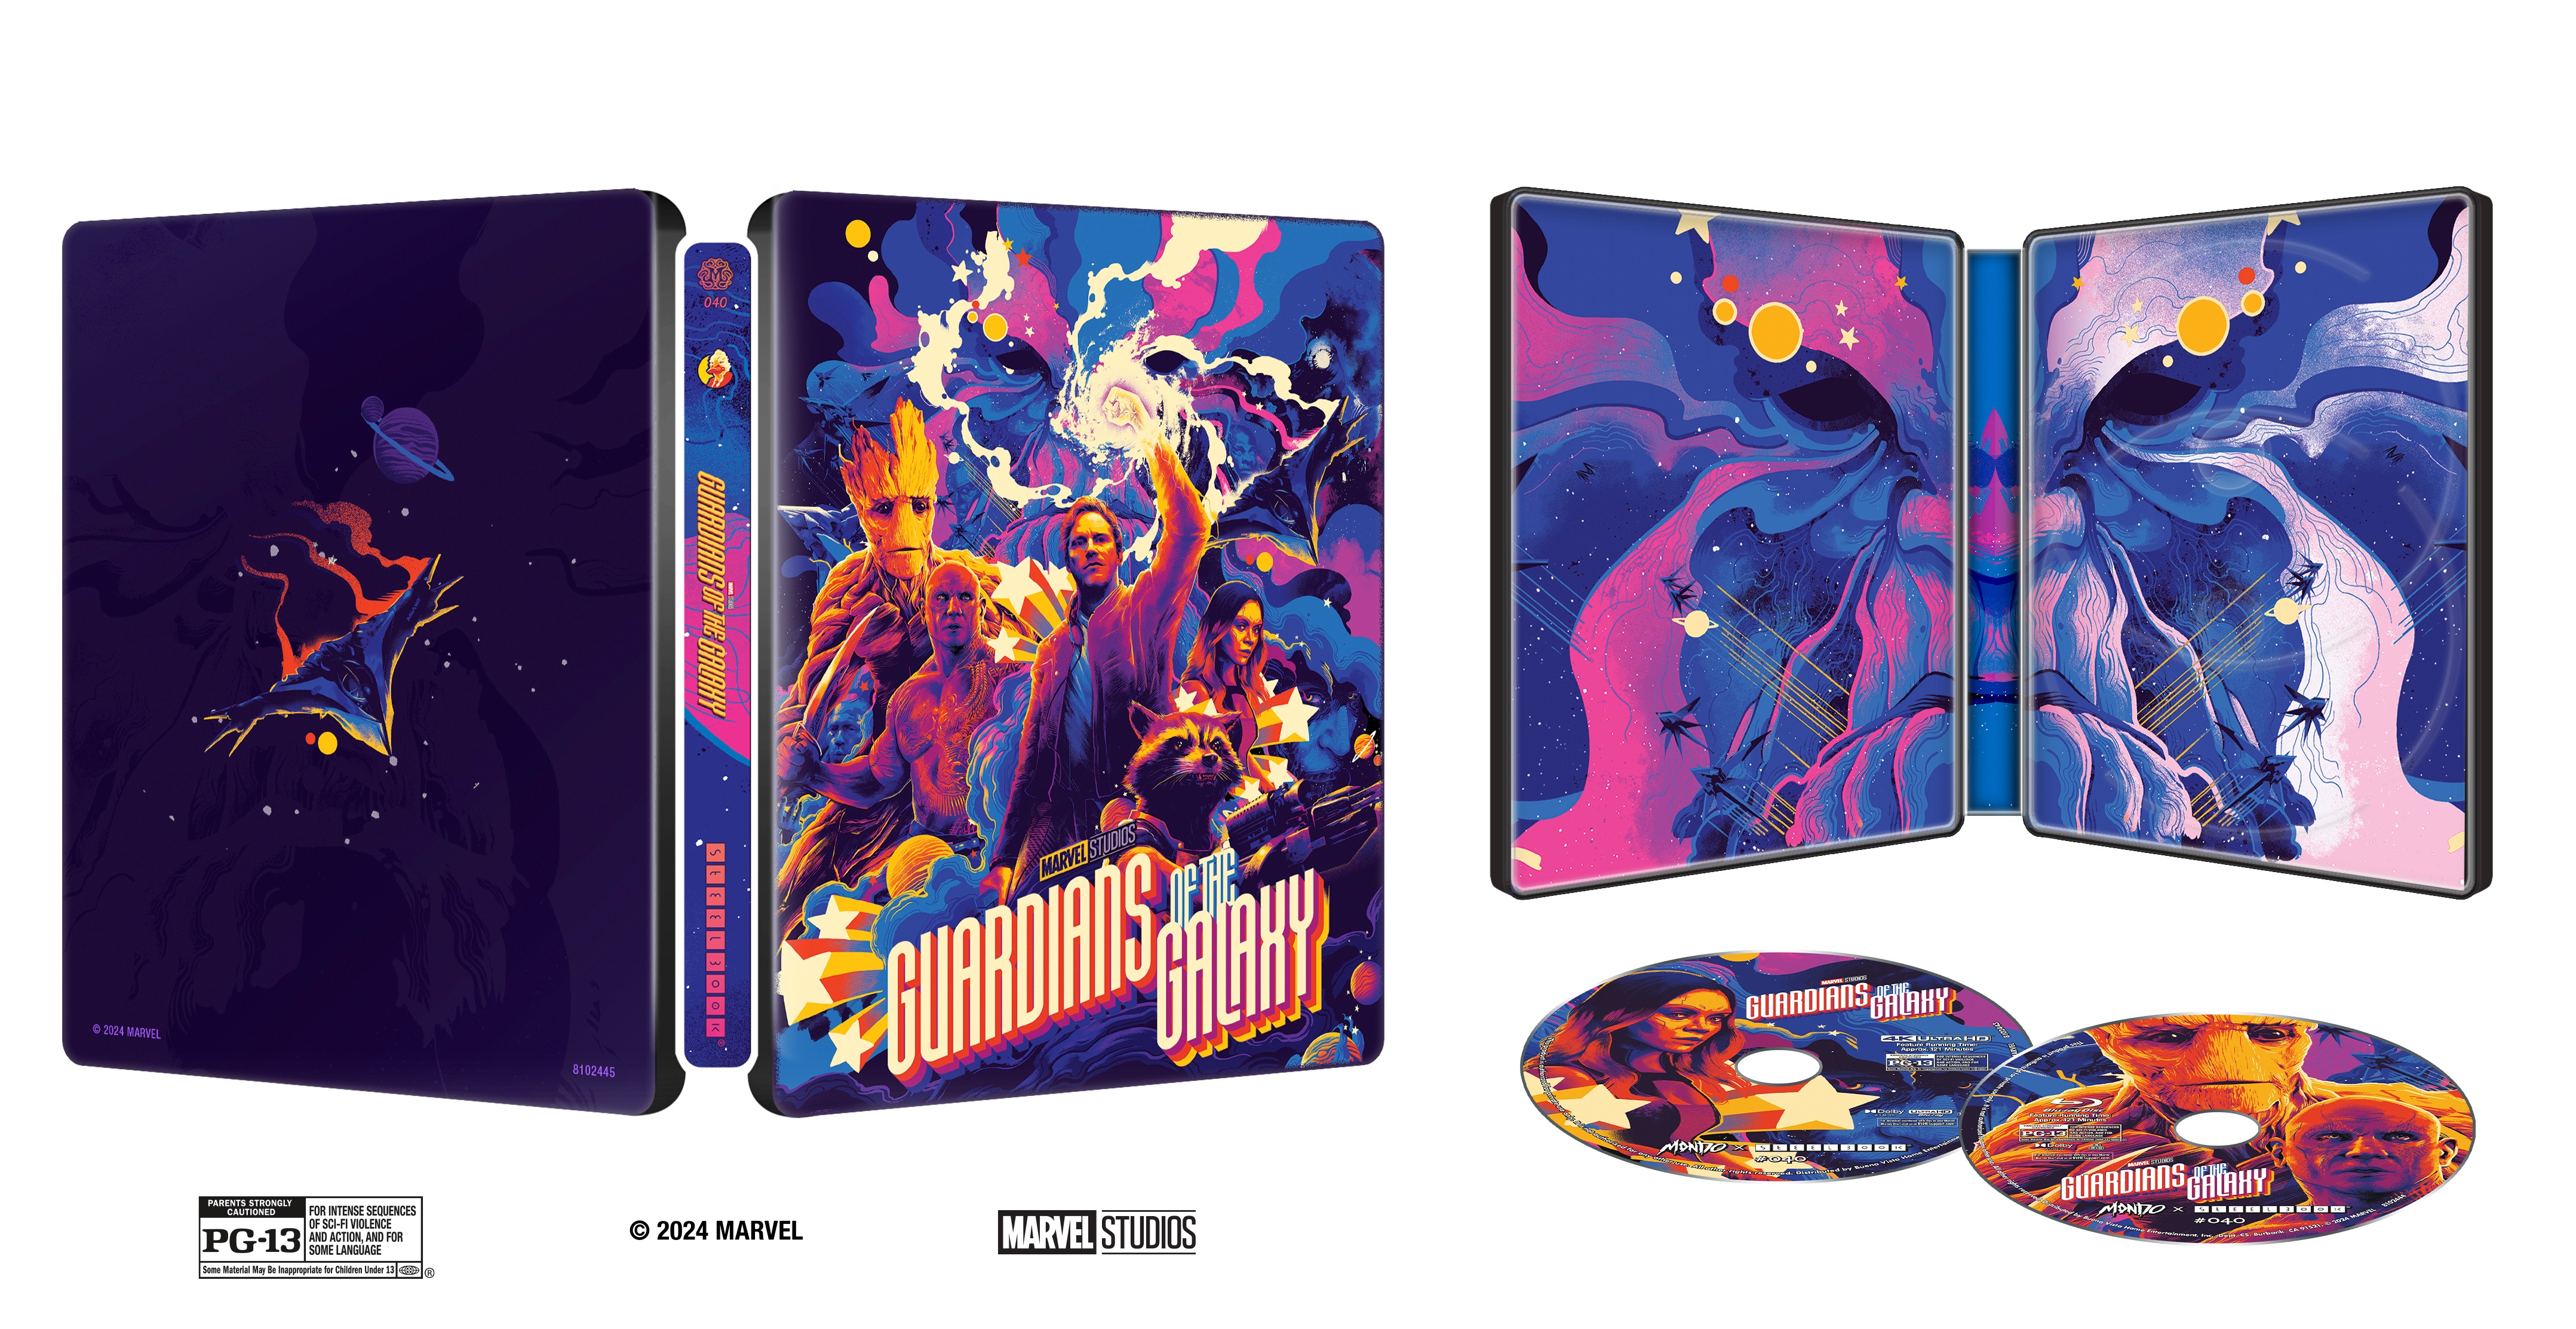 Guardians of the Galaxy Walmart Exclusive Mondo Steelbook (4K Ultra HD + Blu-ray + Digital Code) - image 2 of 3